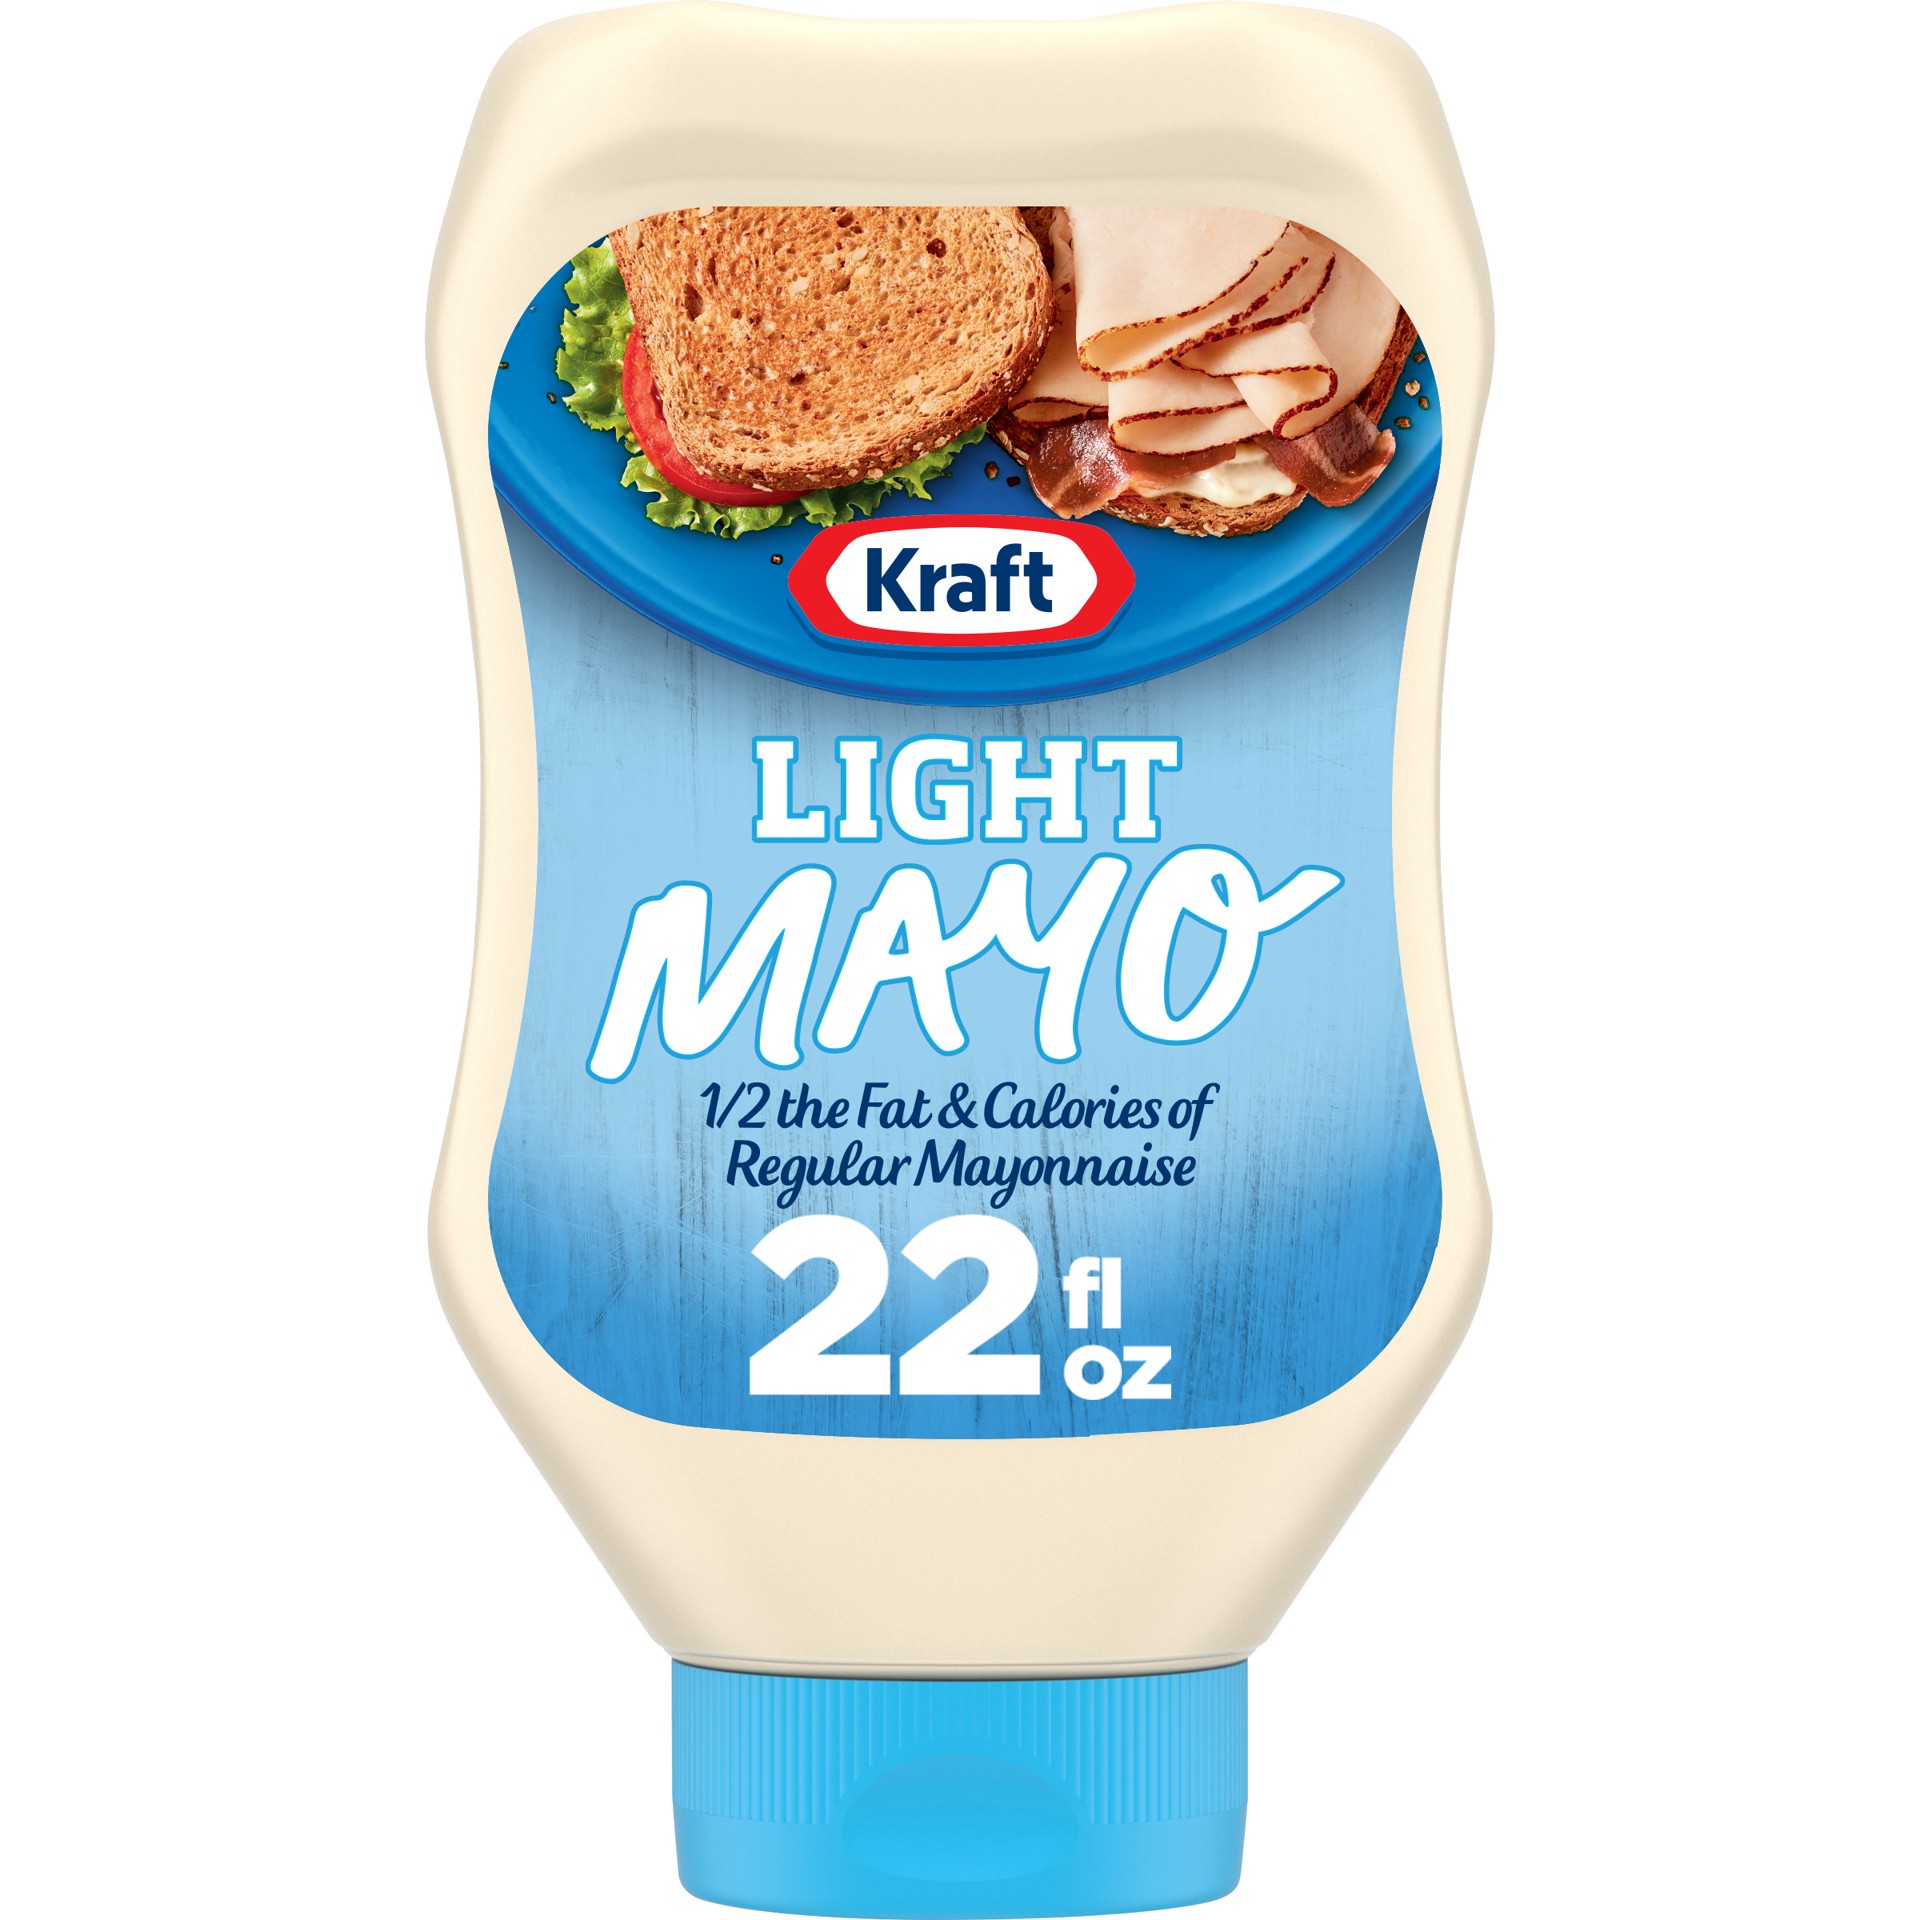 slide 1 of 13, Kraft Light Mayo with 1/2 the Fat & Calories of Regular Mayonnaise, 22 fl oz Bottle, 22 fl oz